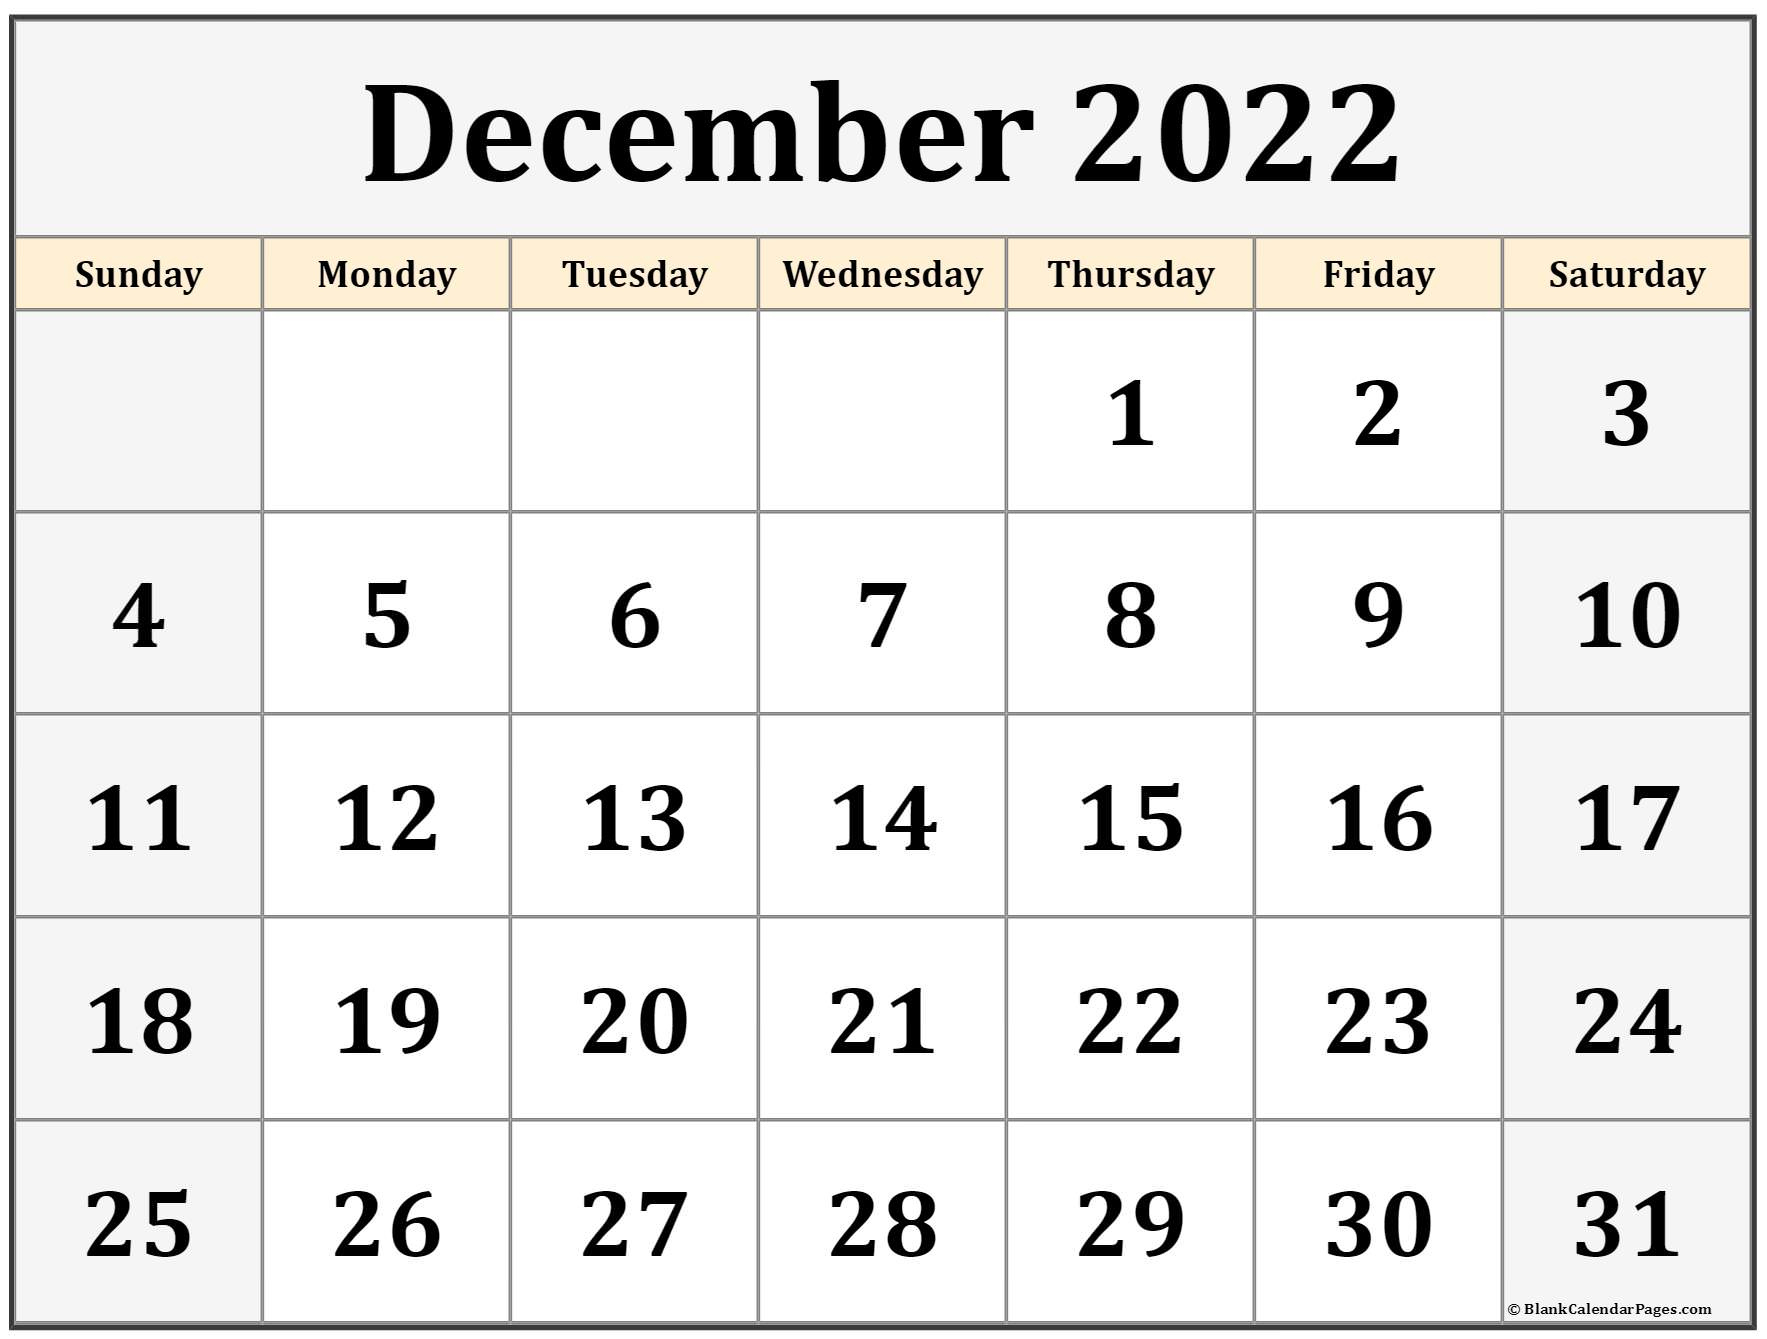 December 2022 Calendar | Free Printable Calendar Templates Free Printable Calendars Monthly Januaary To December